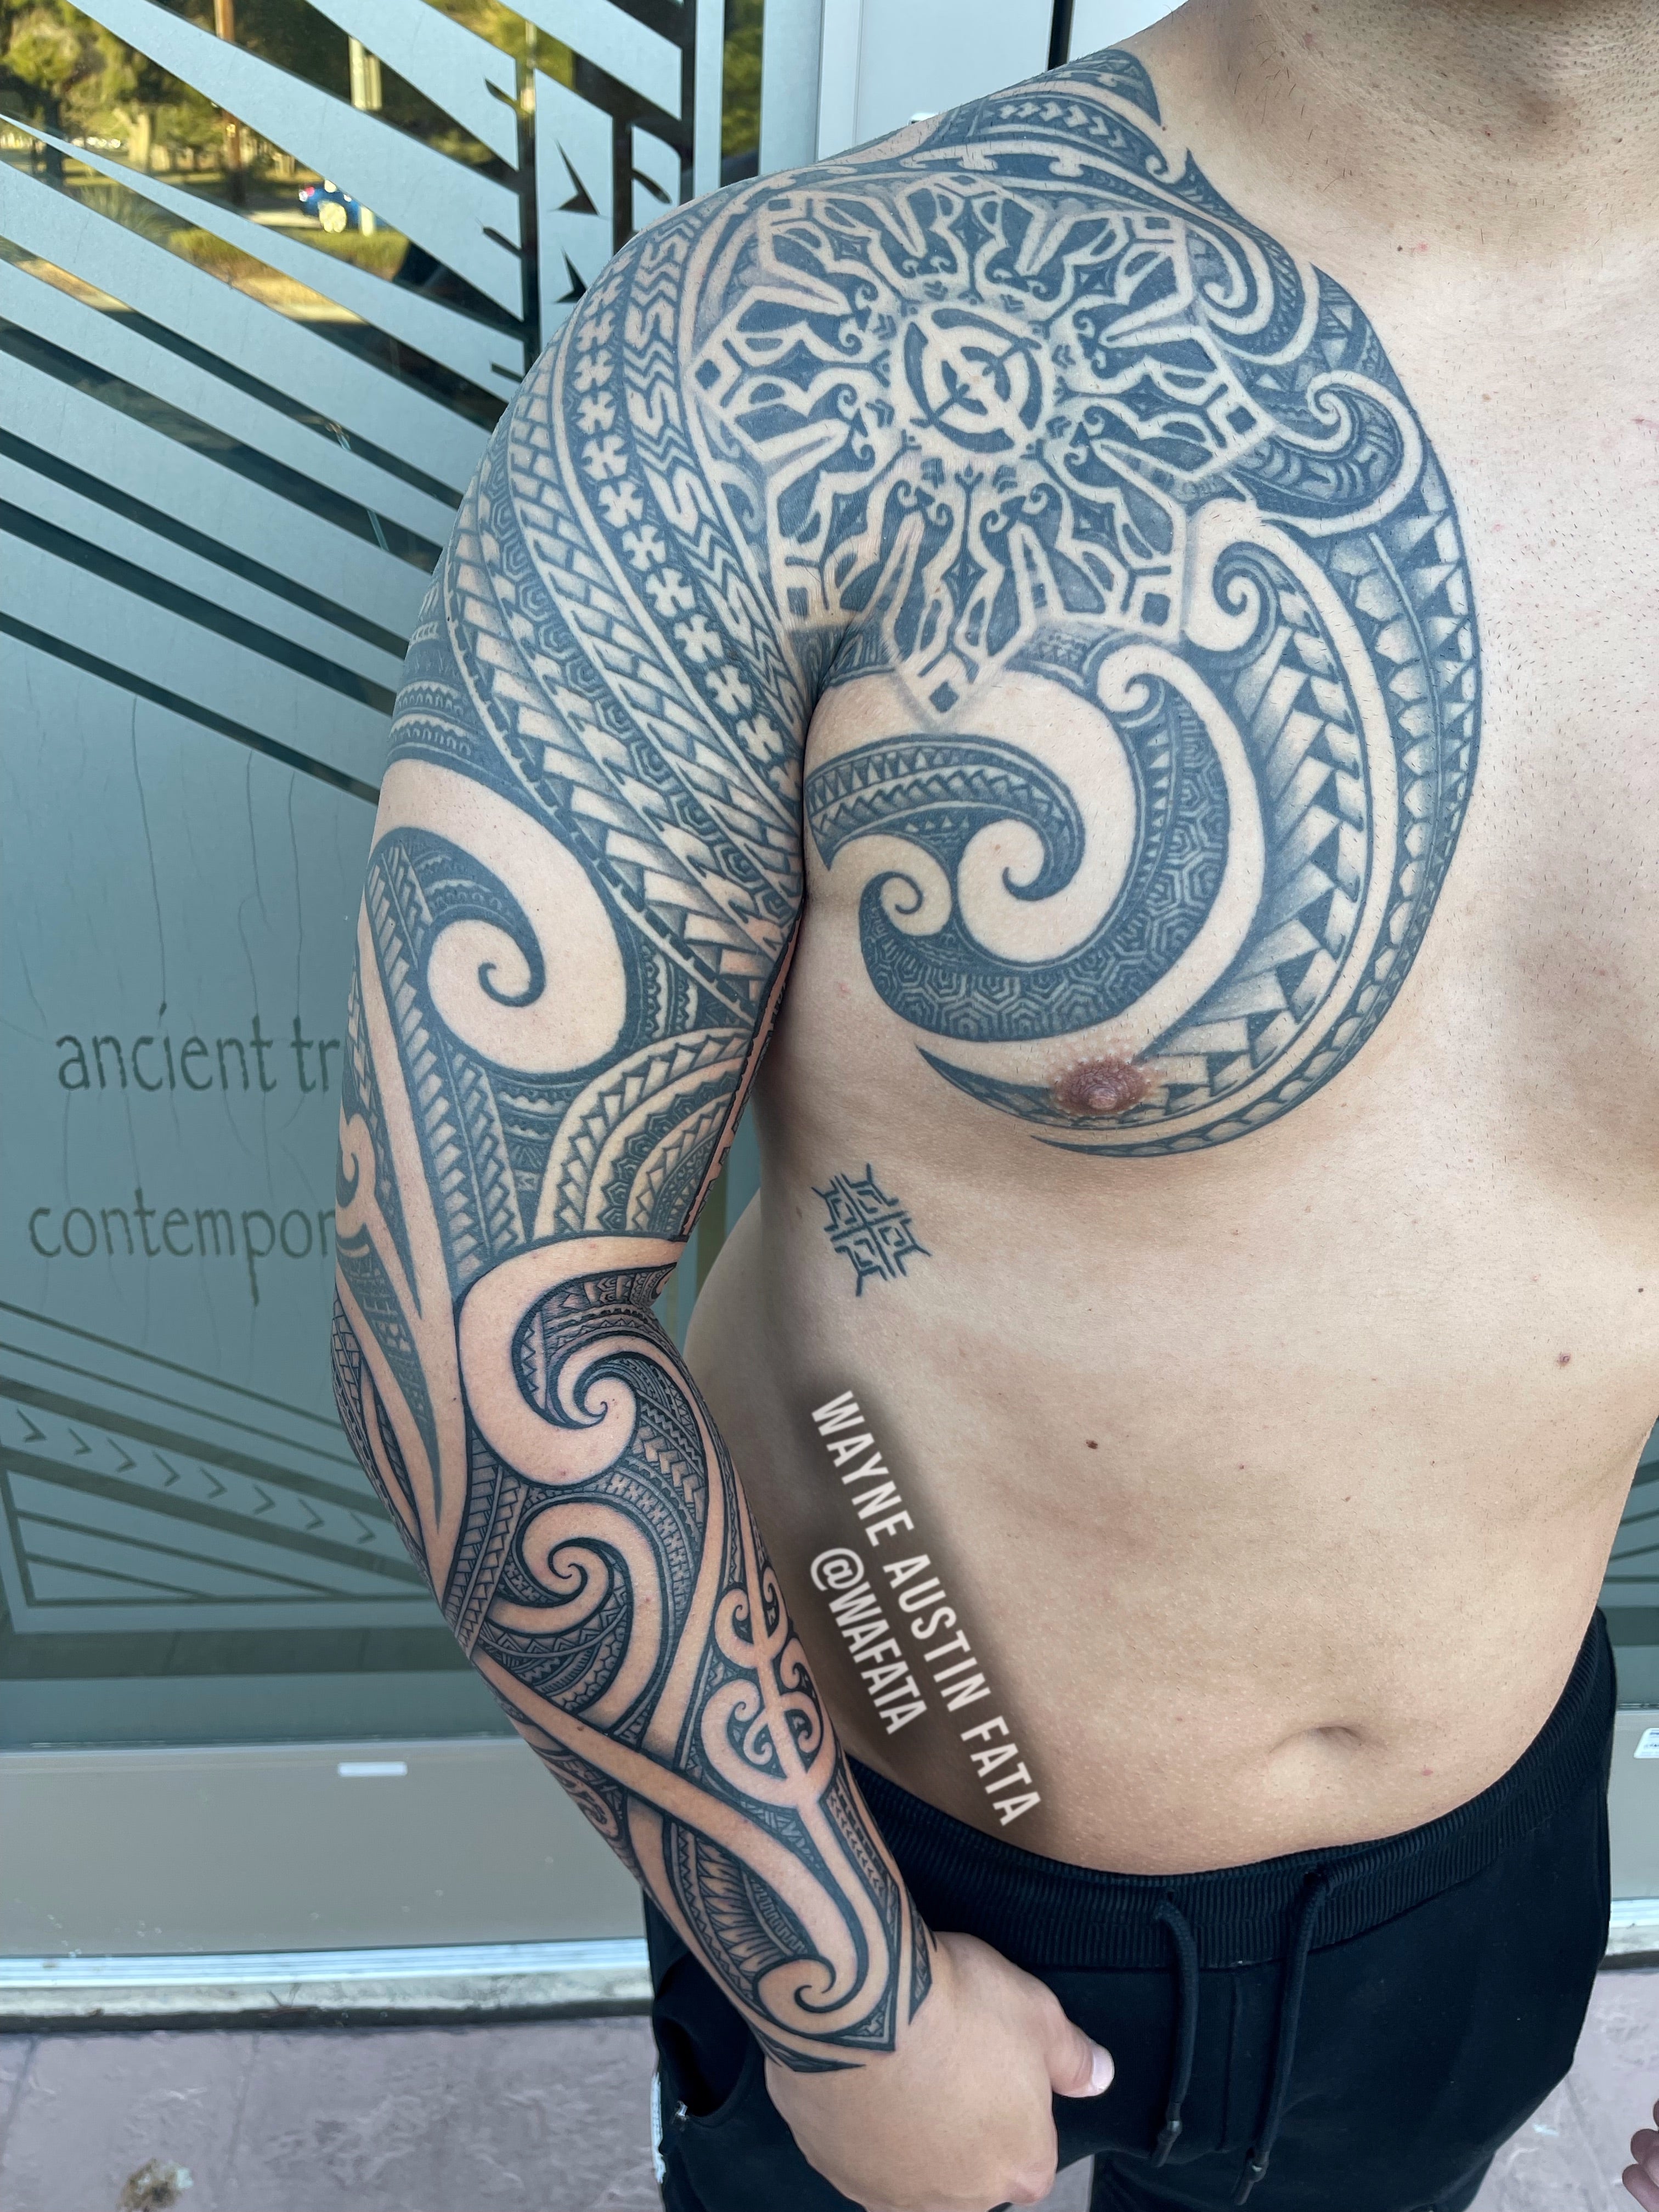 Tattoos - Parts by PsychologicalEntropy on DeviantArt